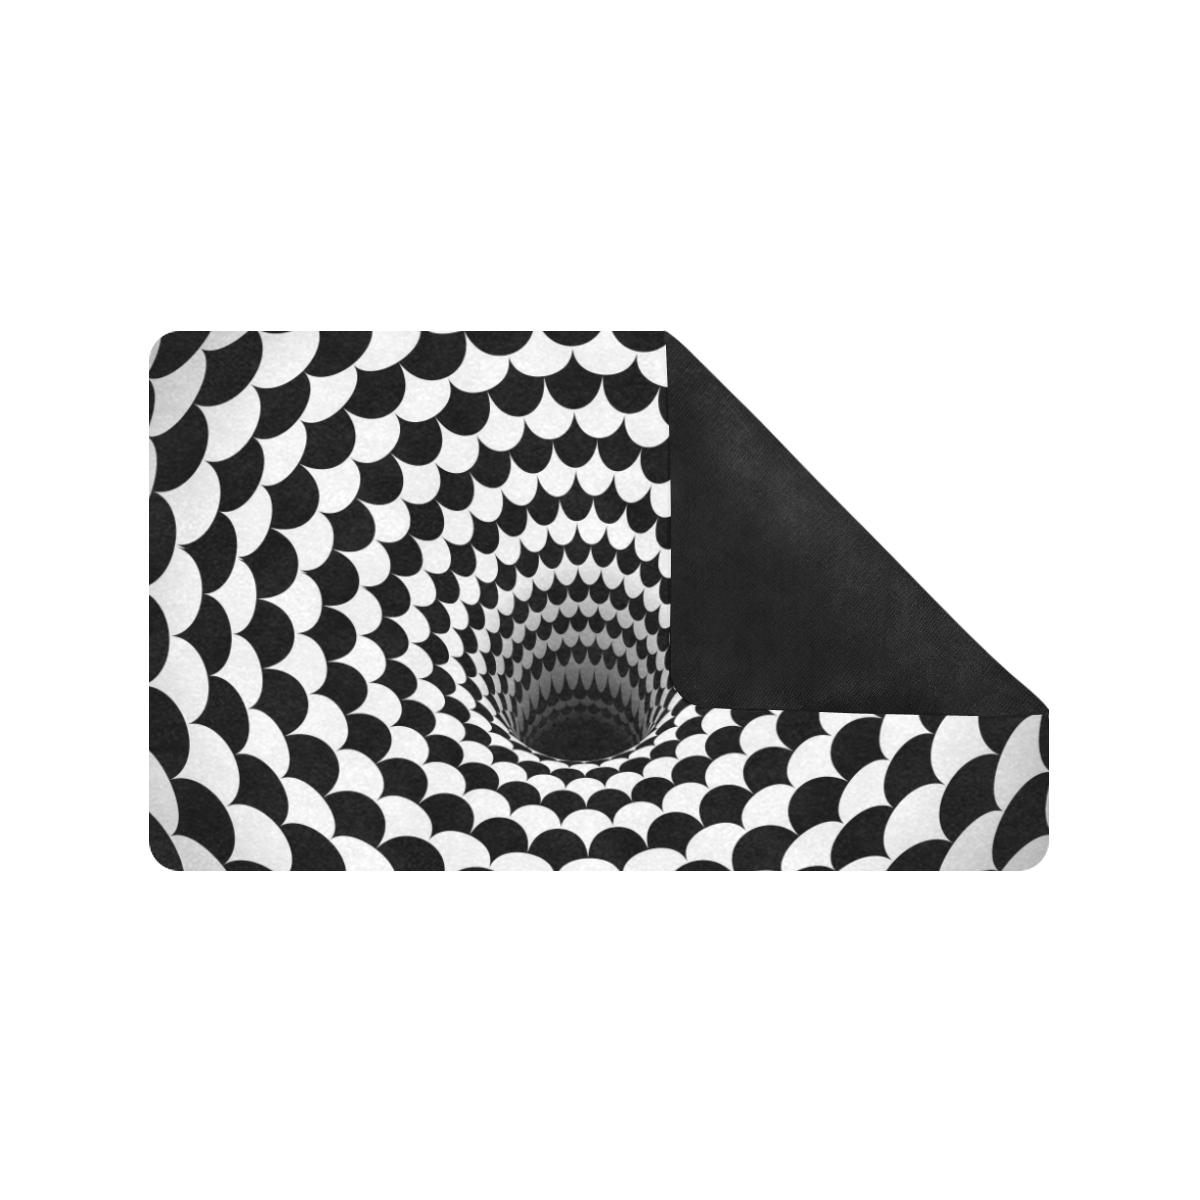 Optical Illusion Black Hole Scales (Black/White) Doormat 30"x18" (Black Base)